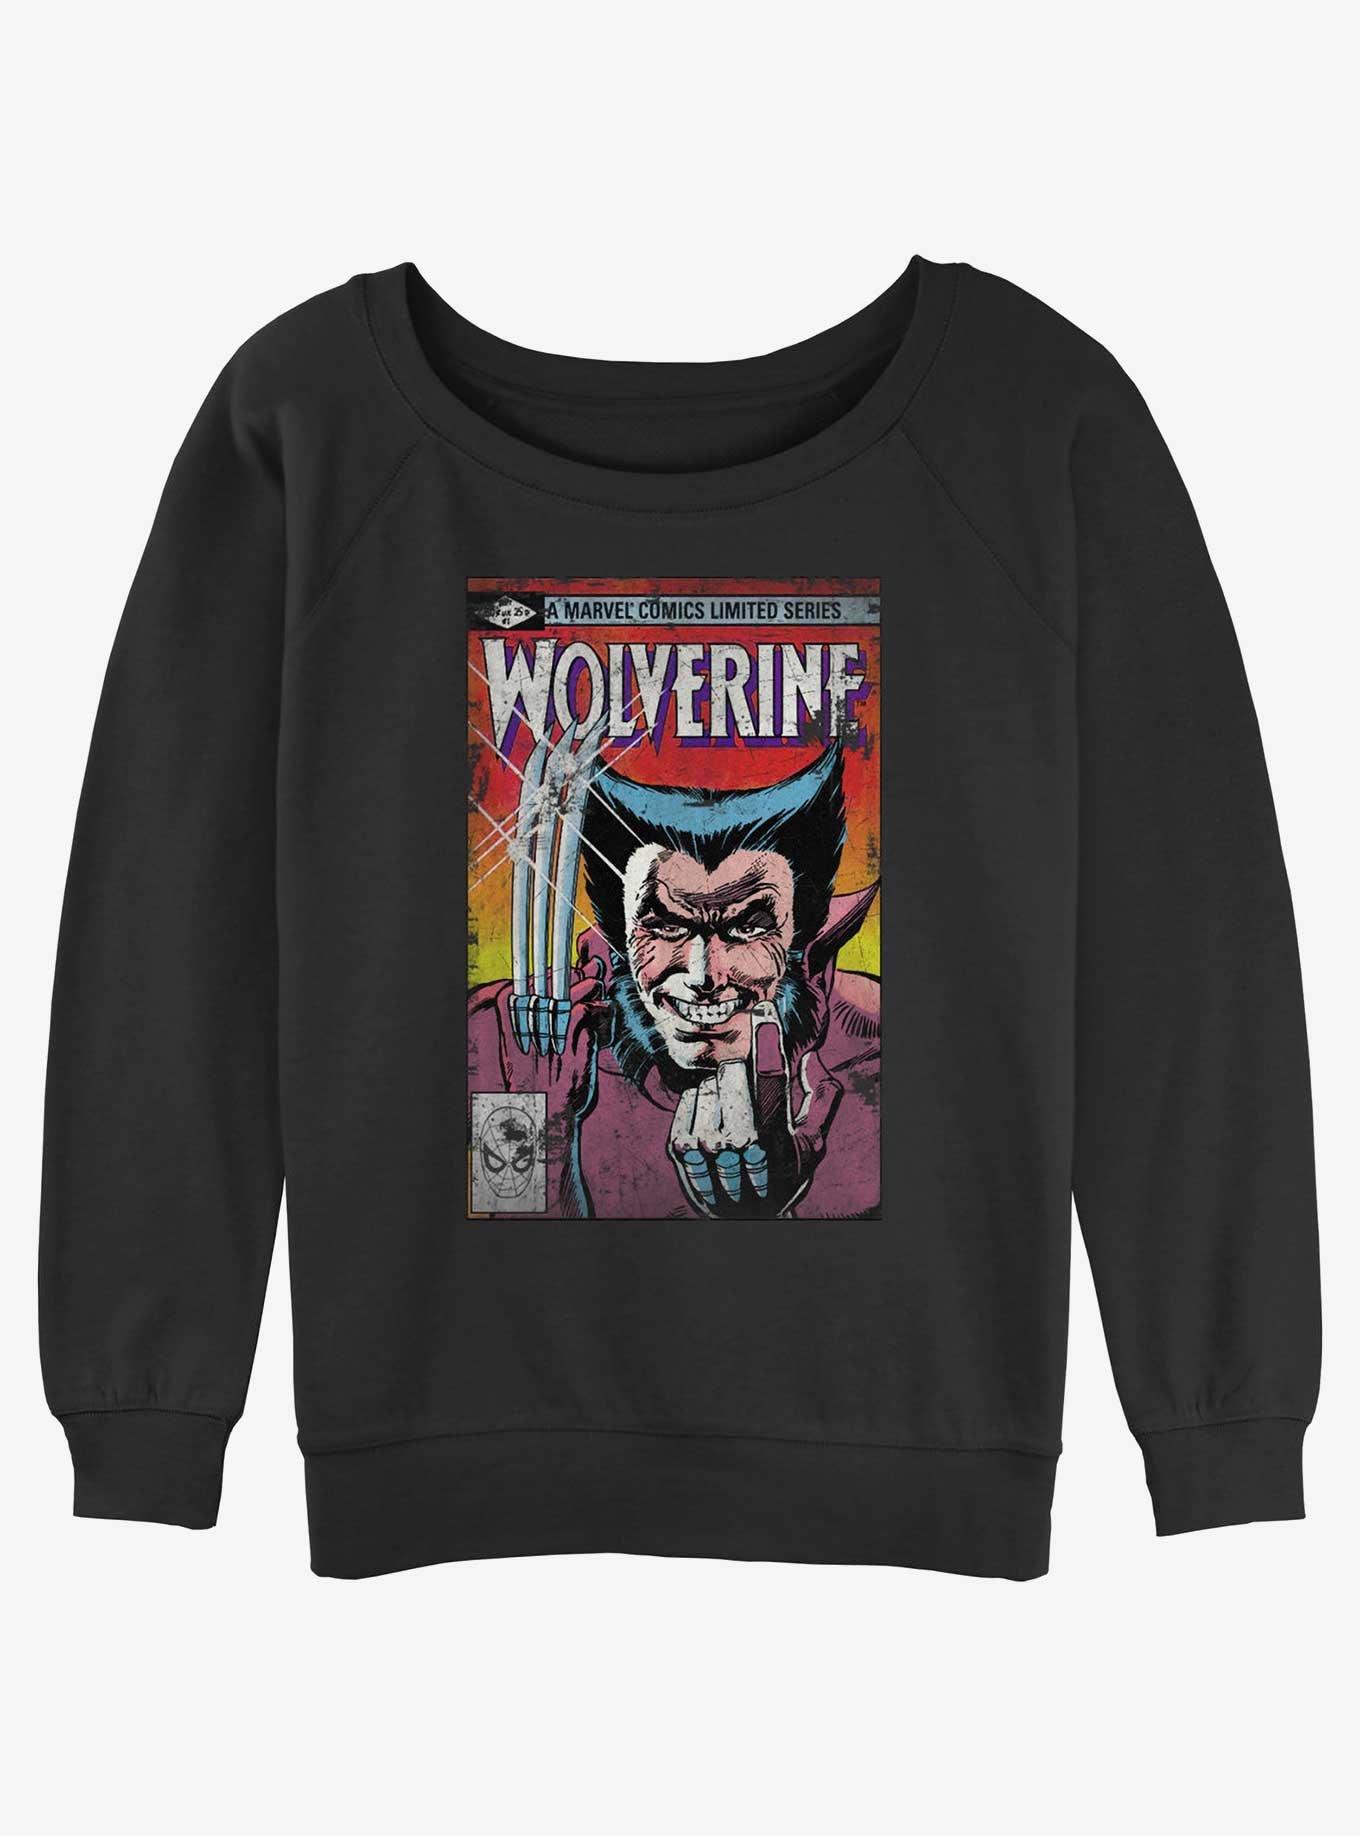 Wolverine Comic Cover Womens Slouchy Sweatshirt, BLACK, hi-res